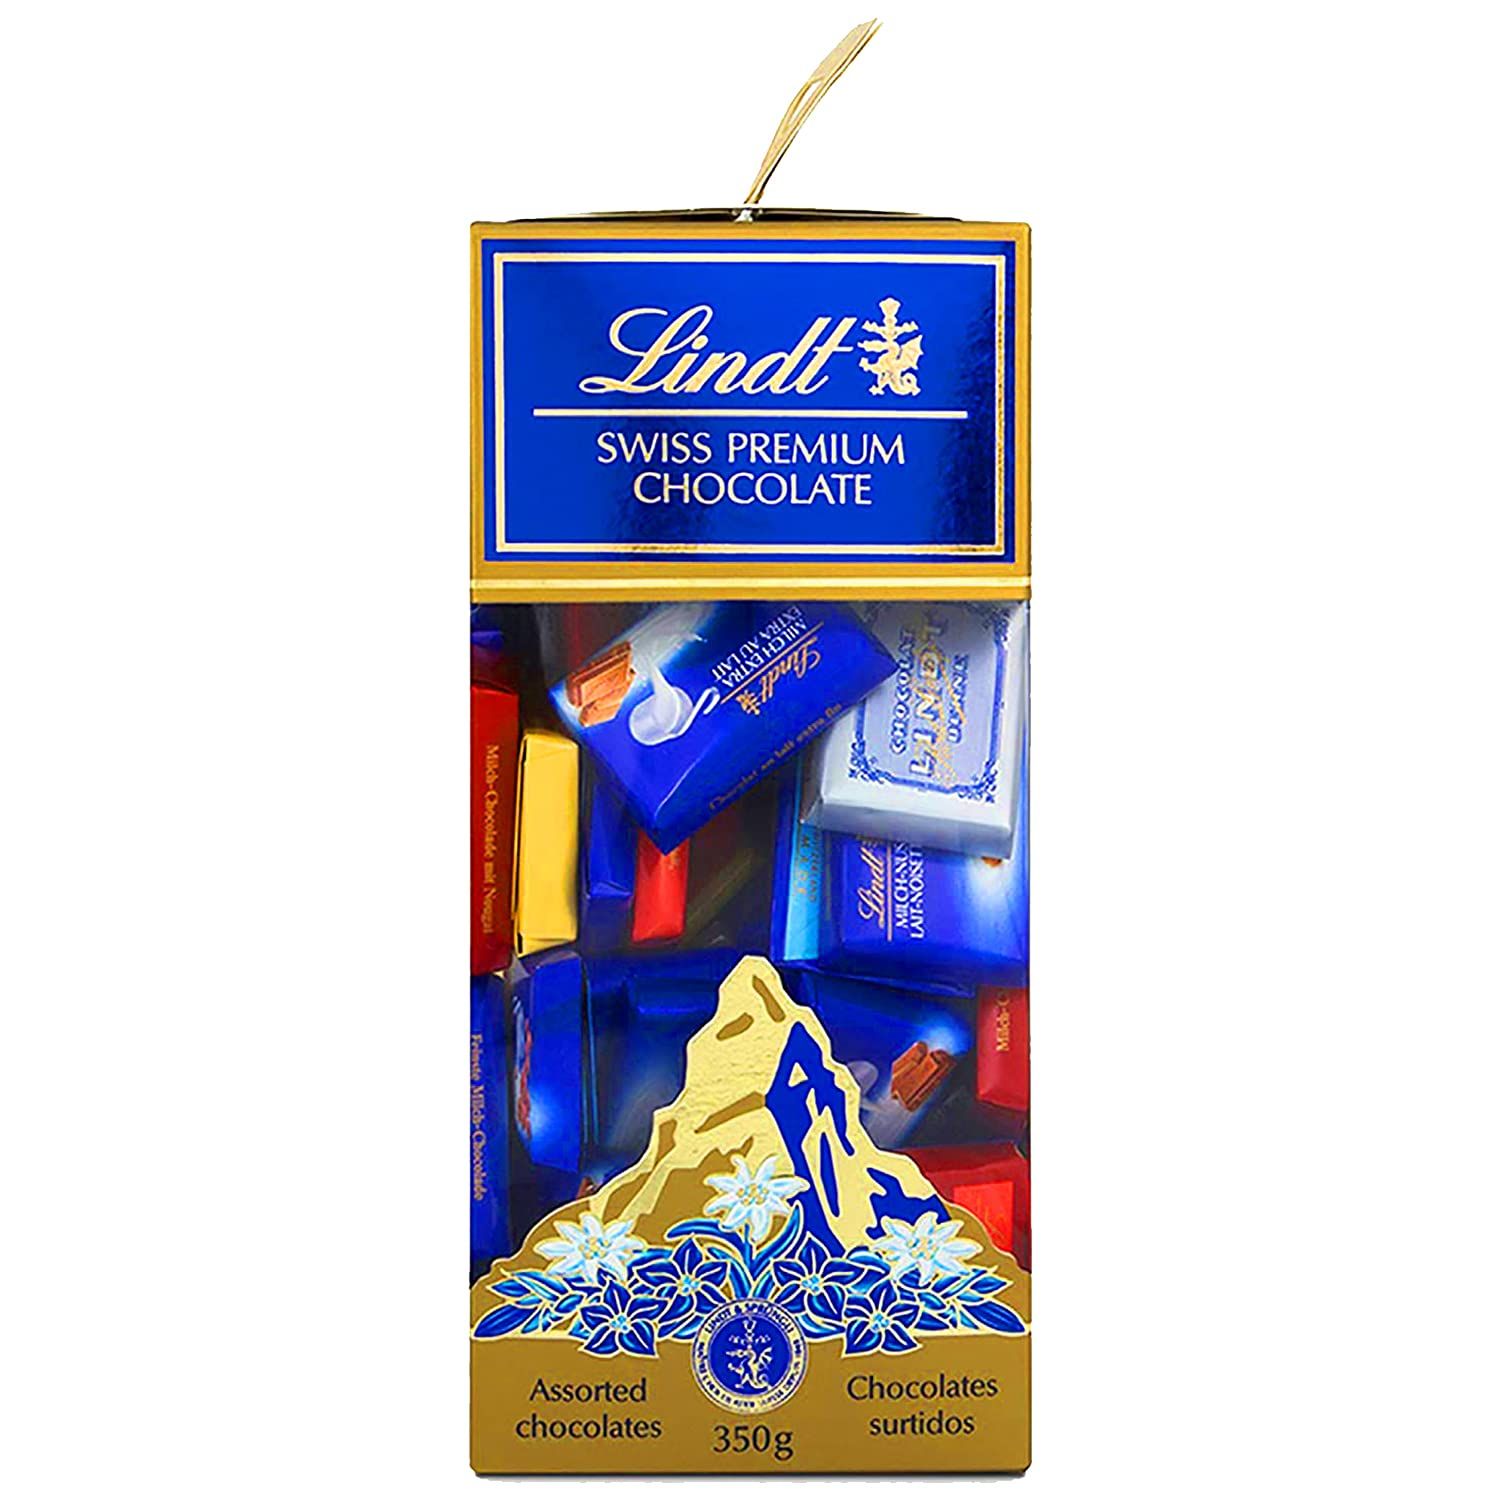 Lindt Swiss Premium Chocolate Image